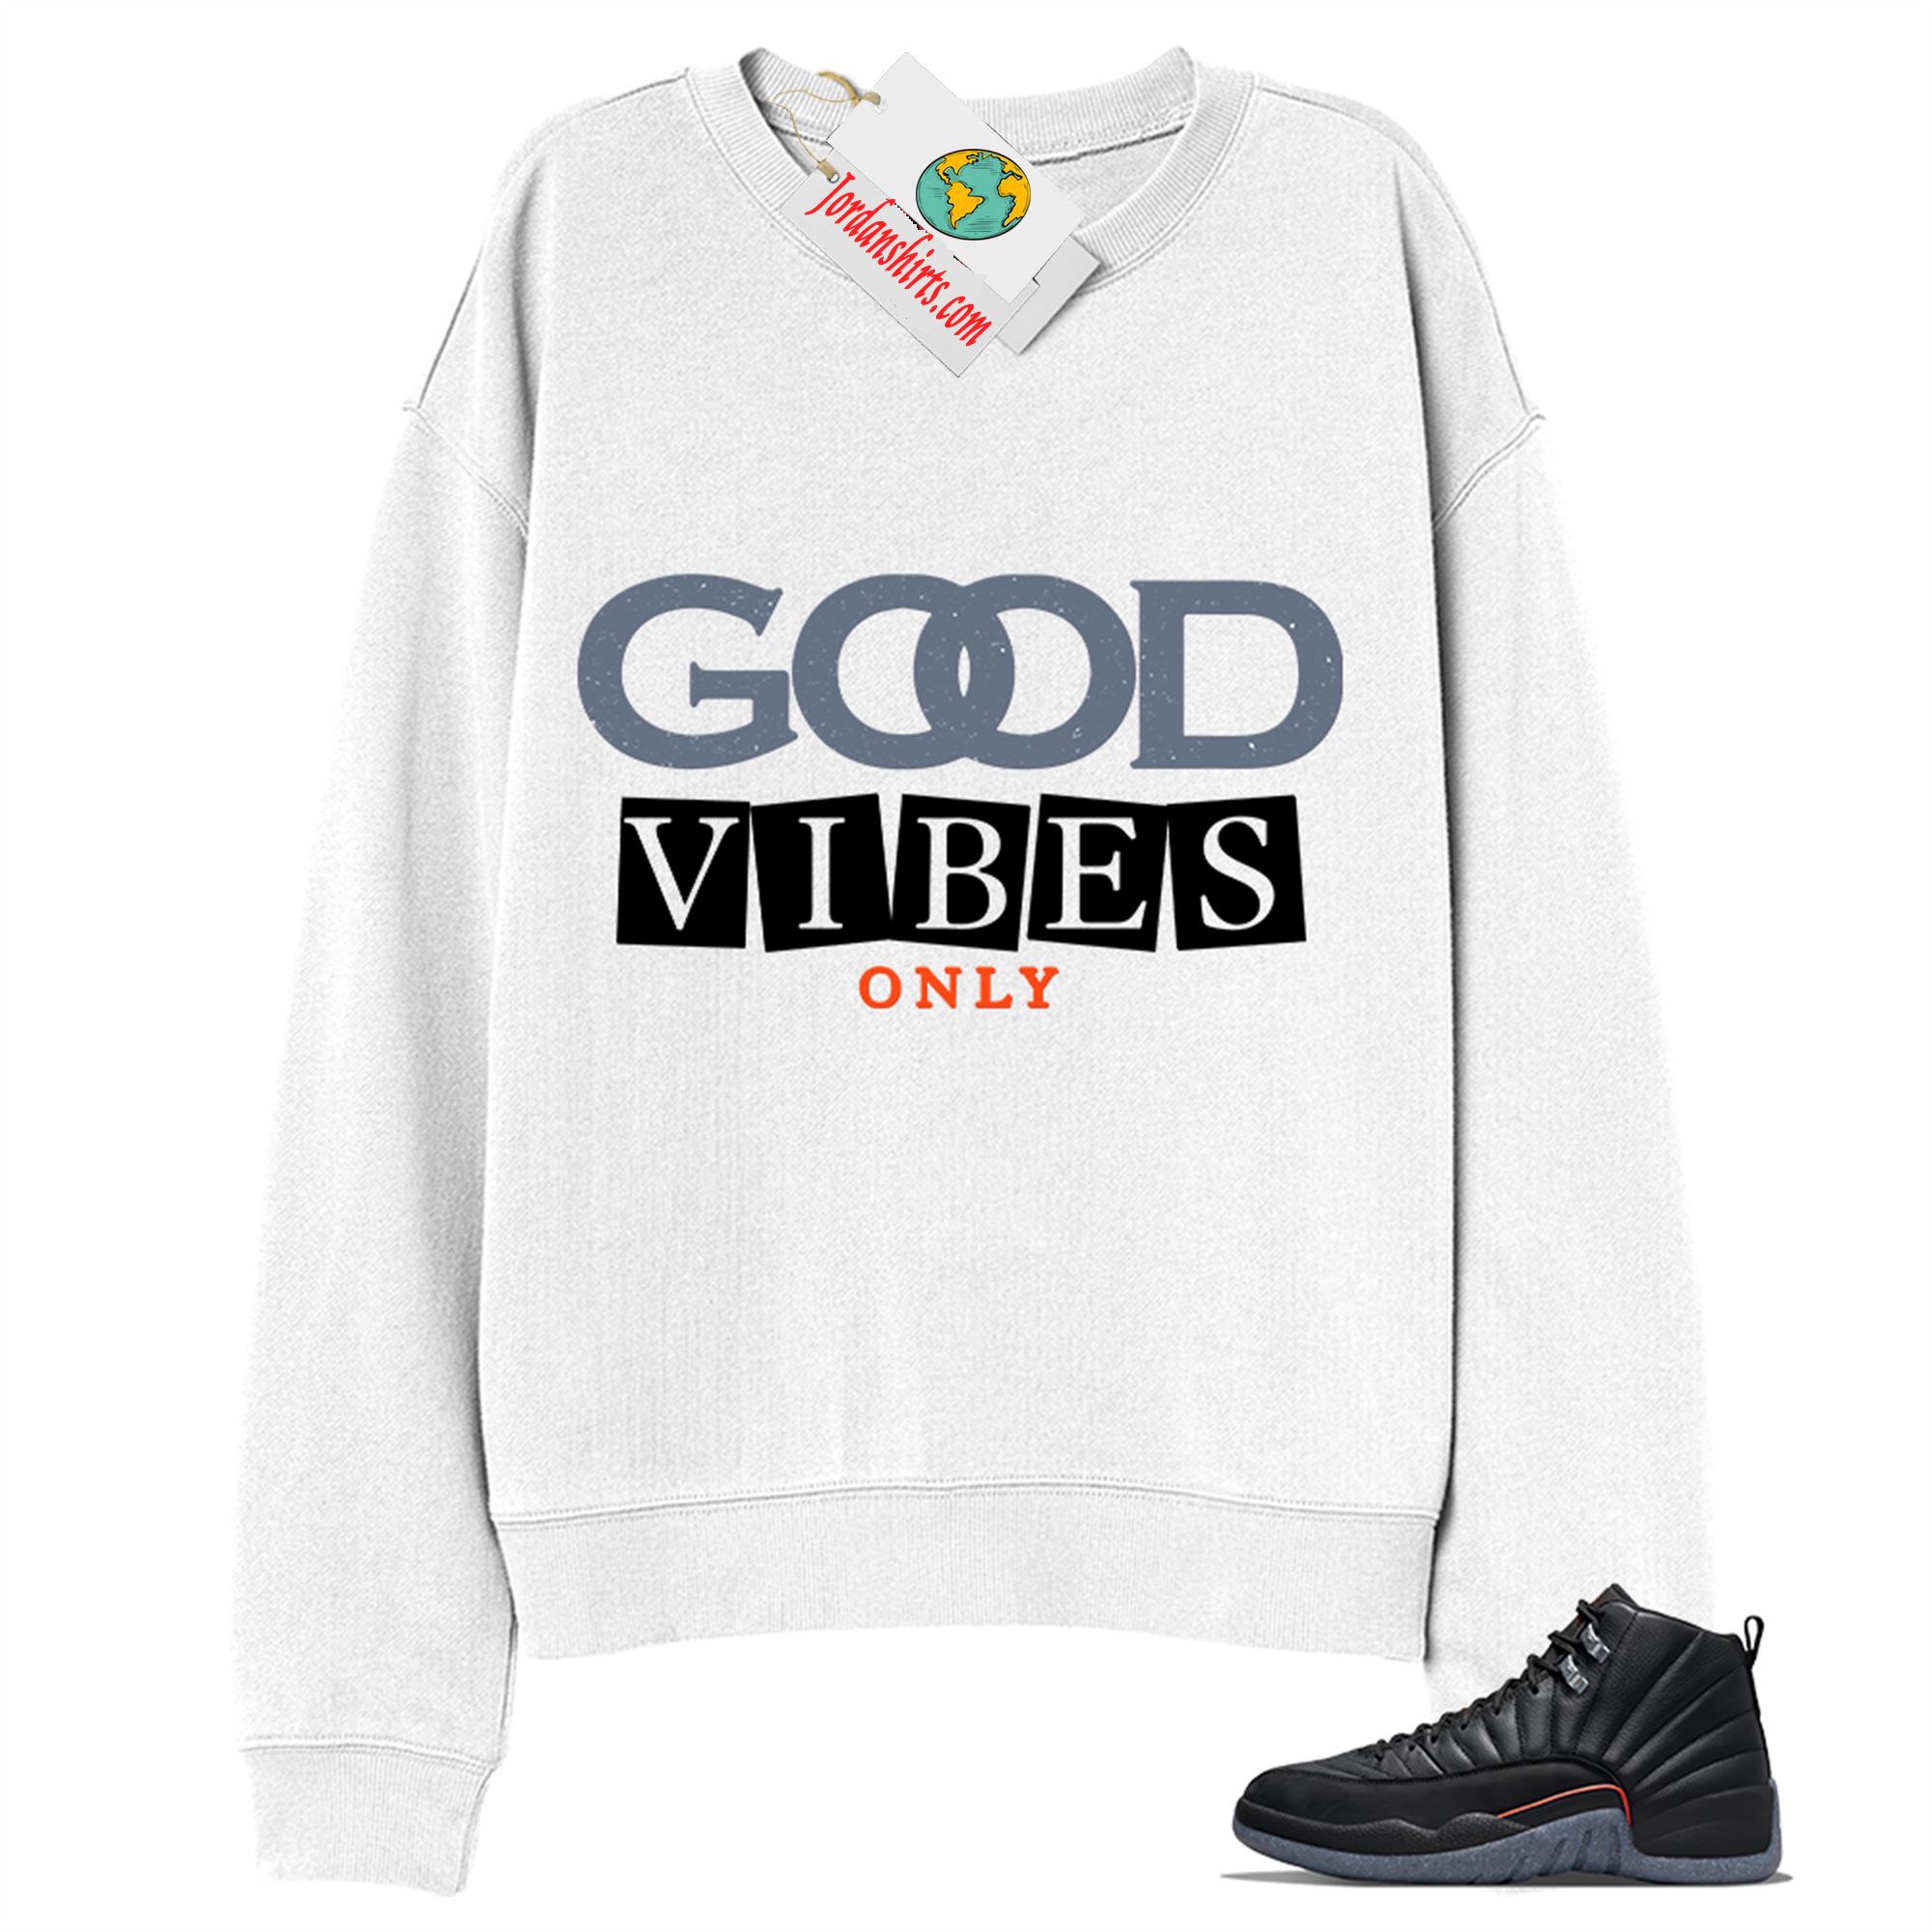 Jordan 12 Sweatshirt, Good Vibes Only White Sweatshirt Air Jordan 12 Utility Grind 12s Size Up To 5xl